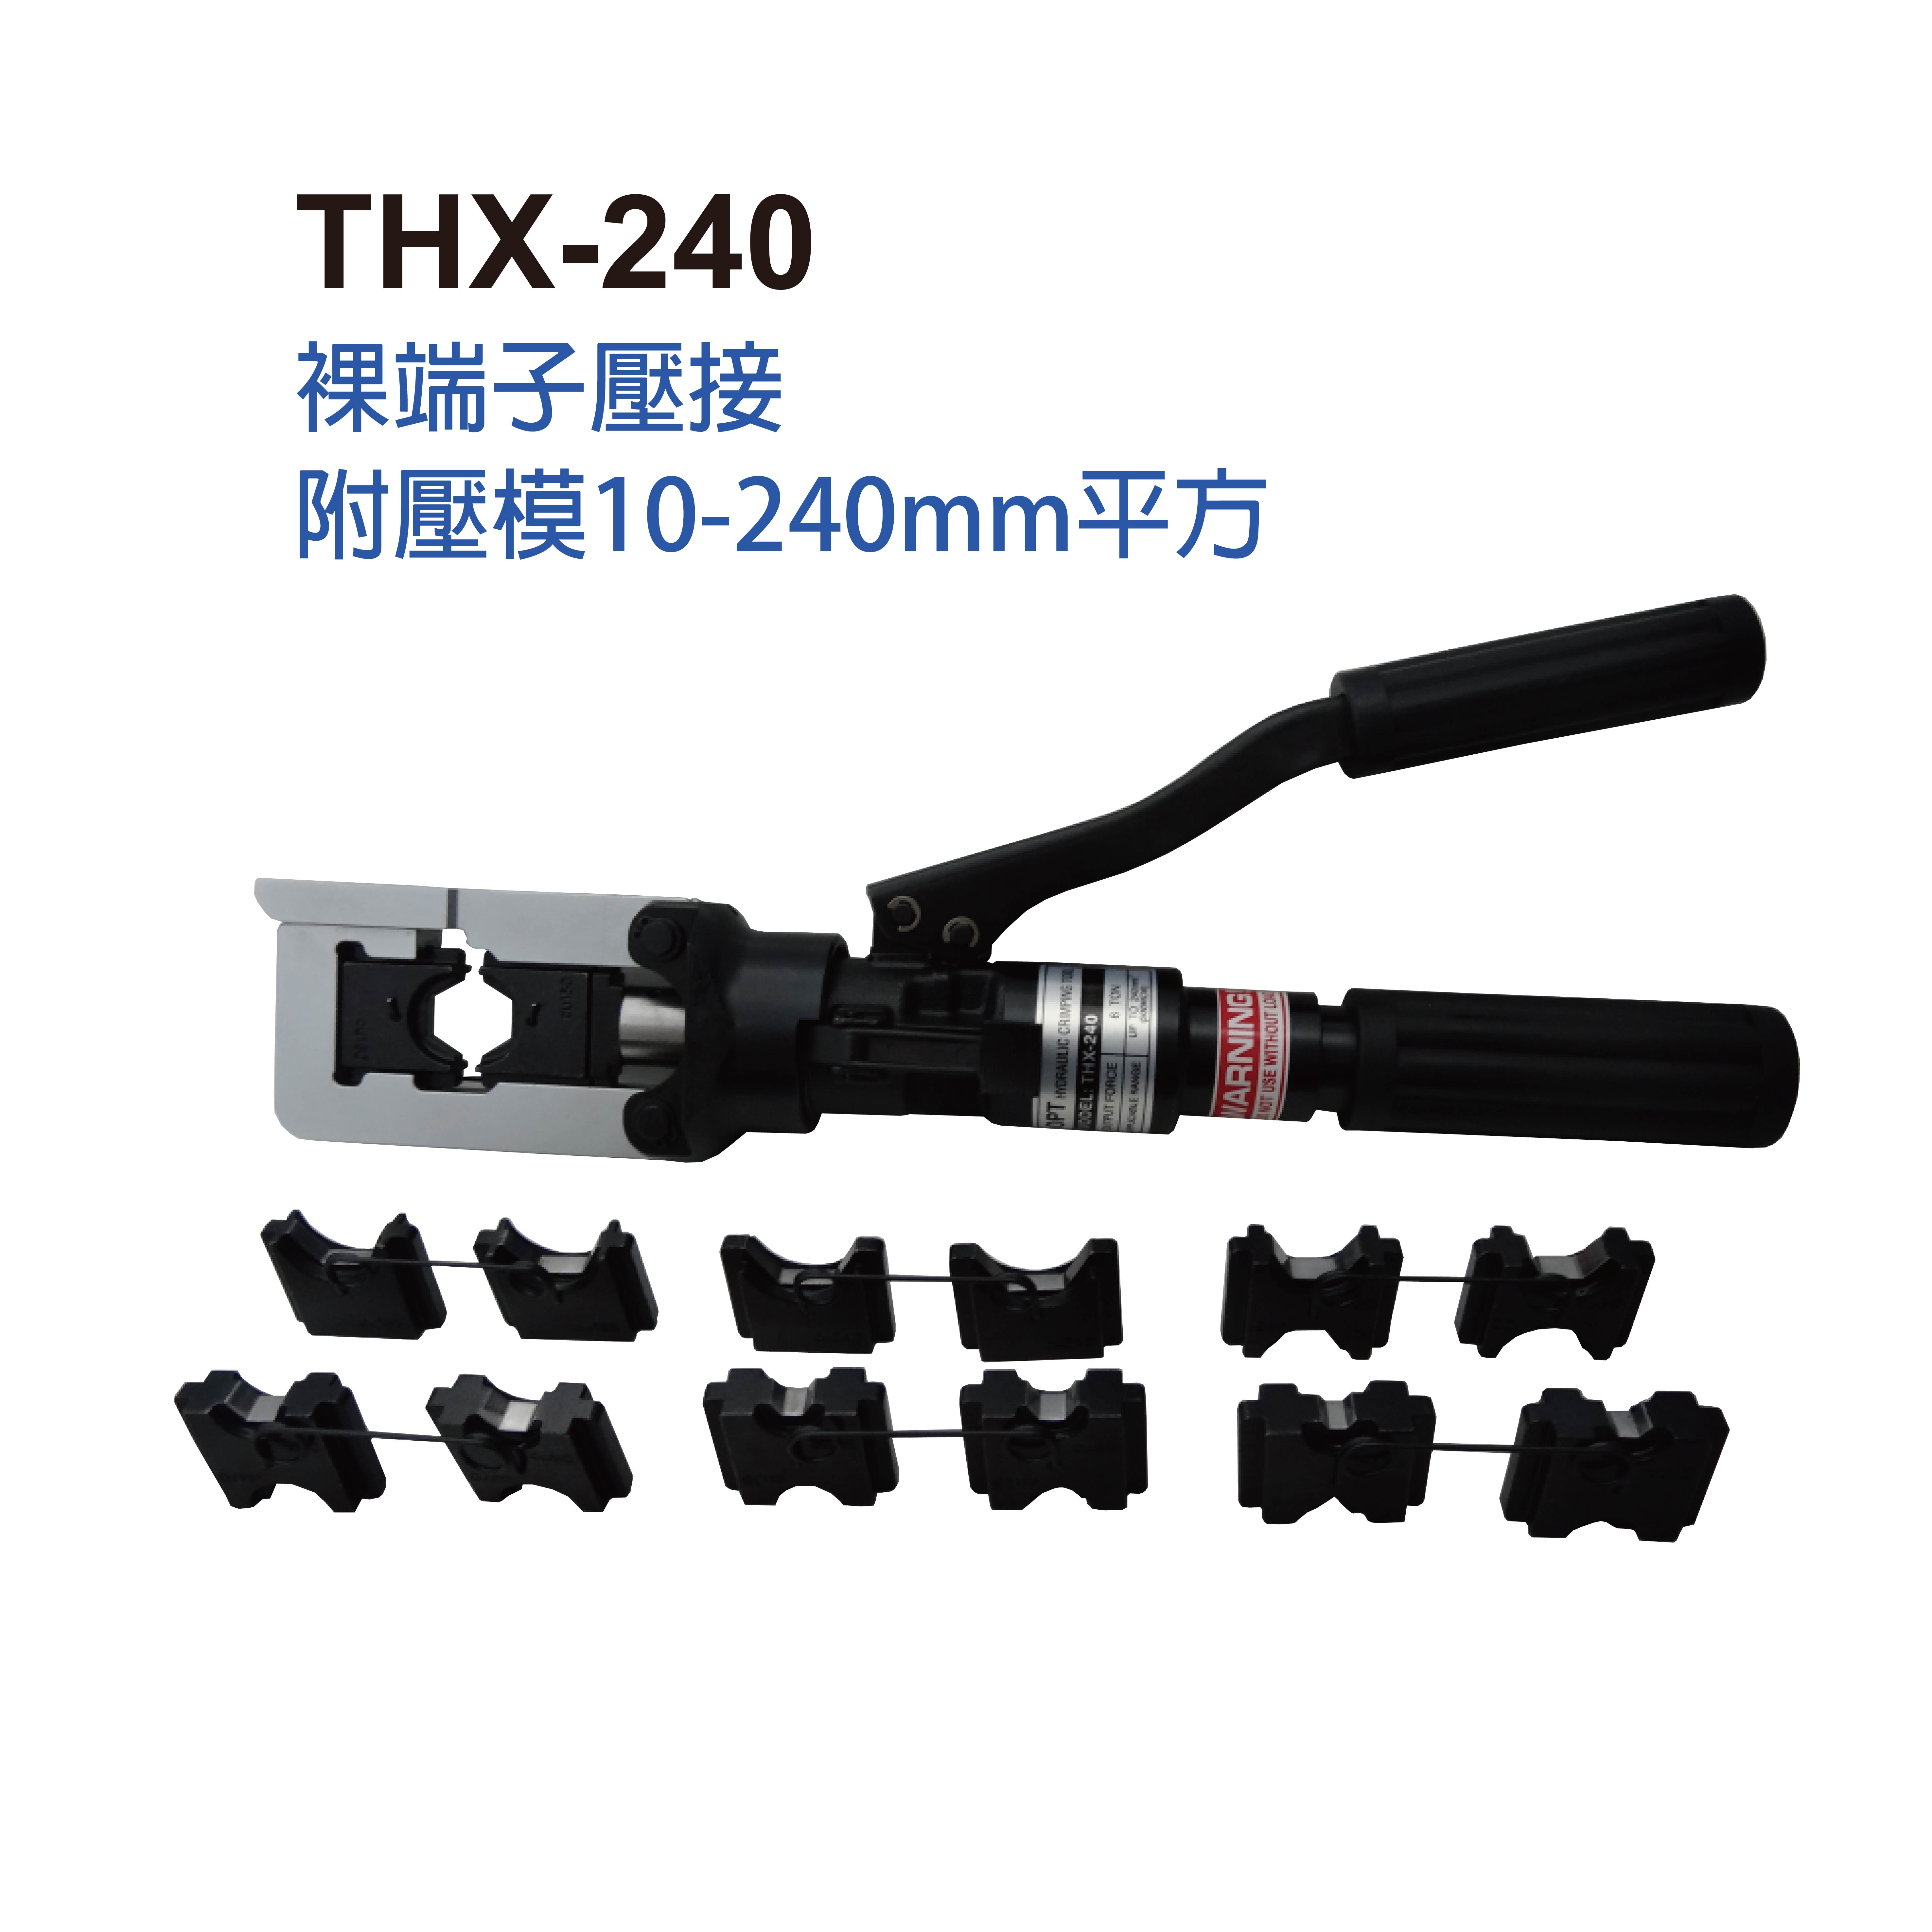 THX-2401 MANUAL HYDRAULIC CRIMPING TOOLS-THX-2401 